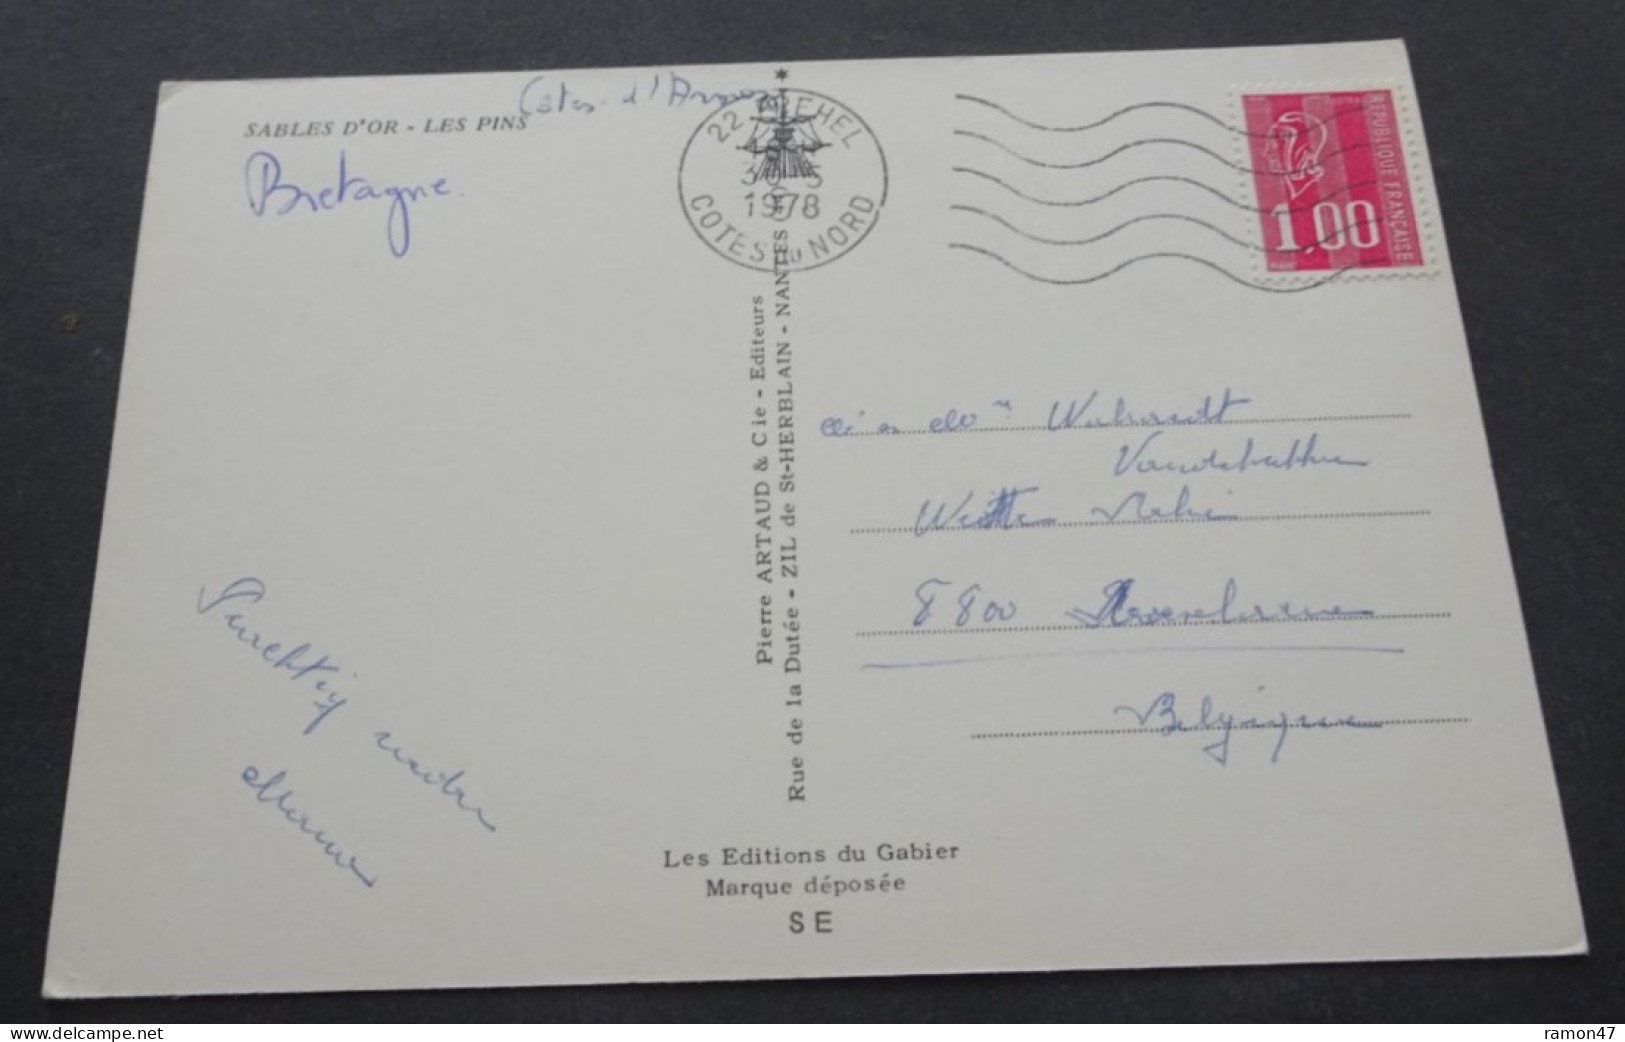 Sables D'Or - Les Pins - Pierre Artaud & Cie, Editeurs, St-Herblain-Nantes - Dinan